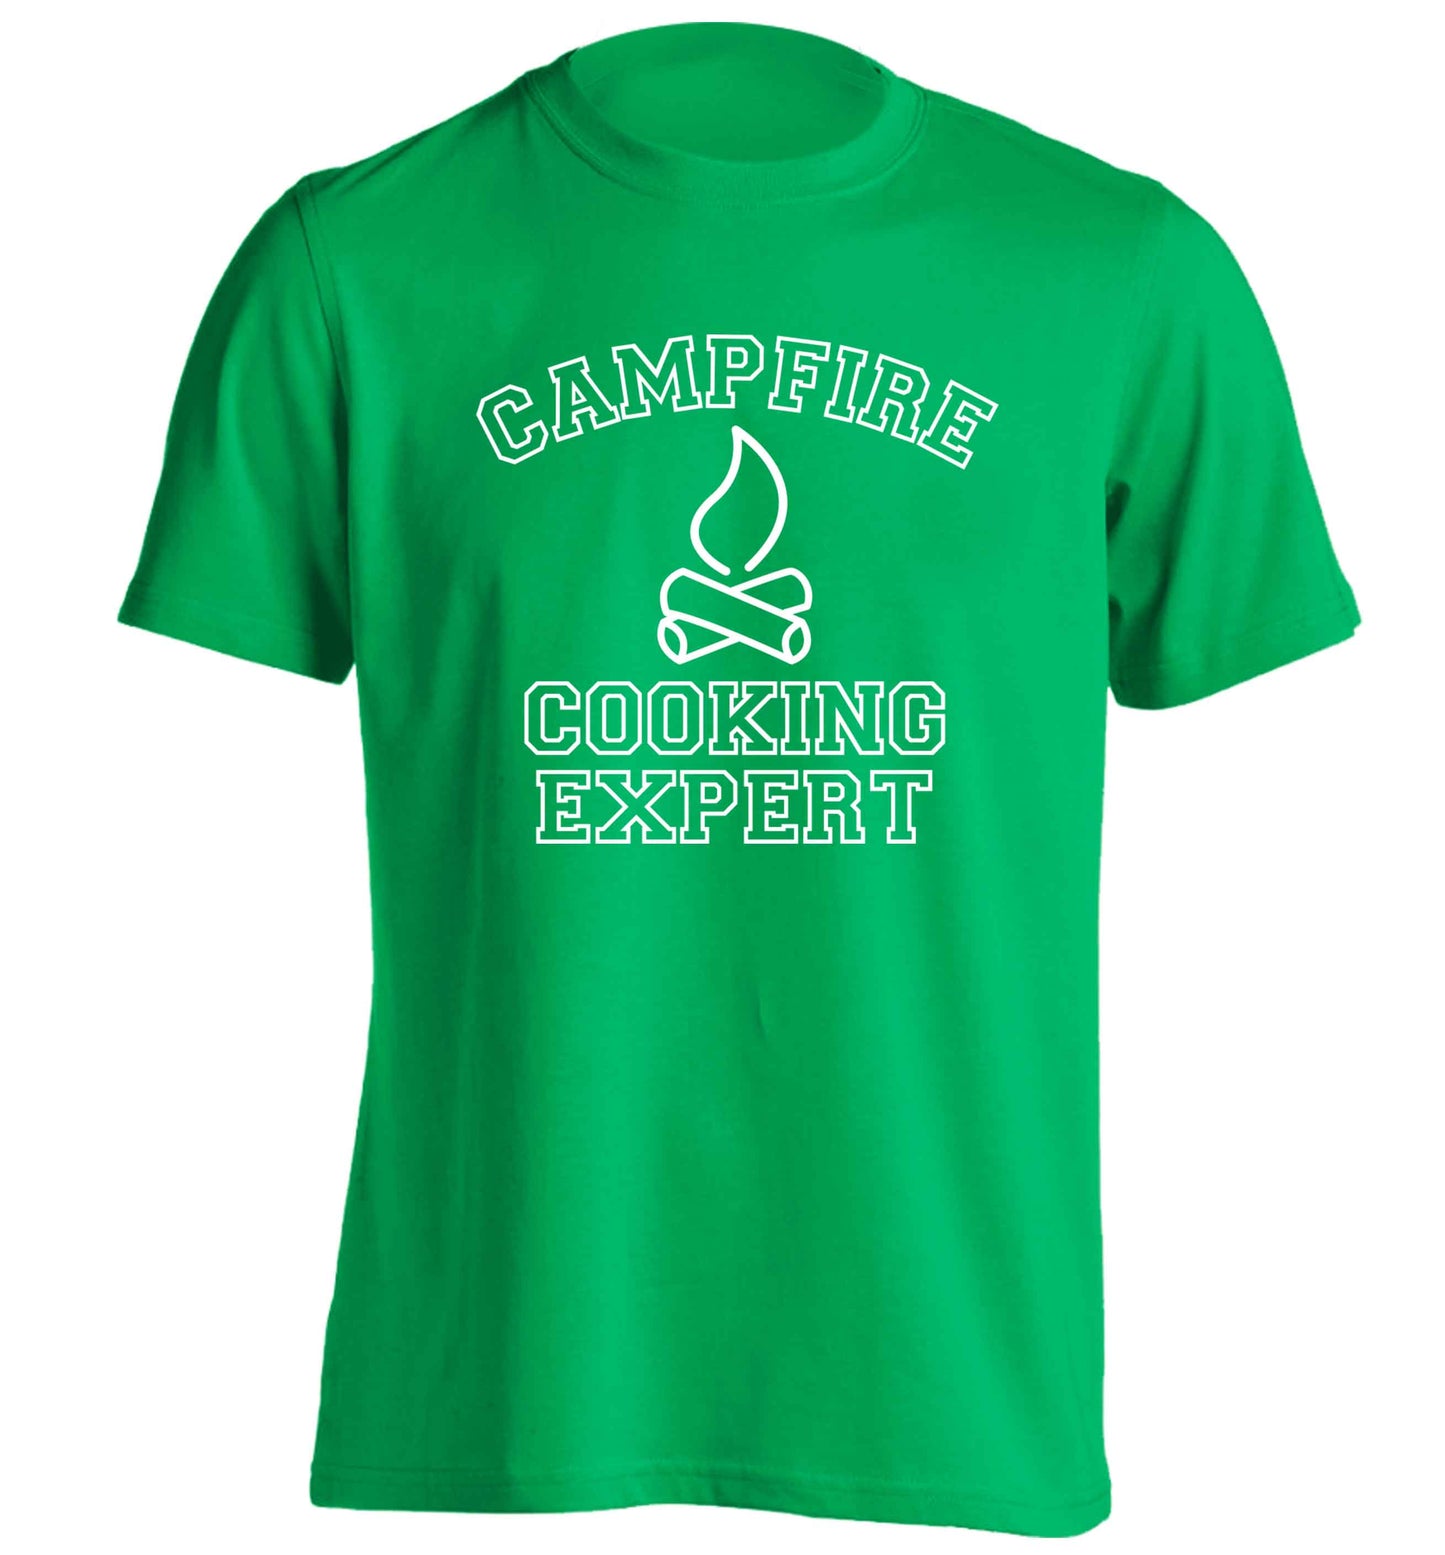 Campfire cooking expert adults unisex green Tshirt 2XL